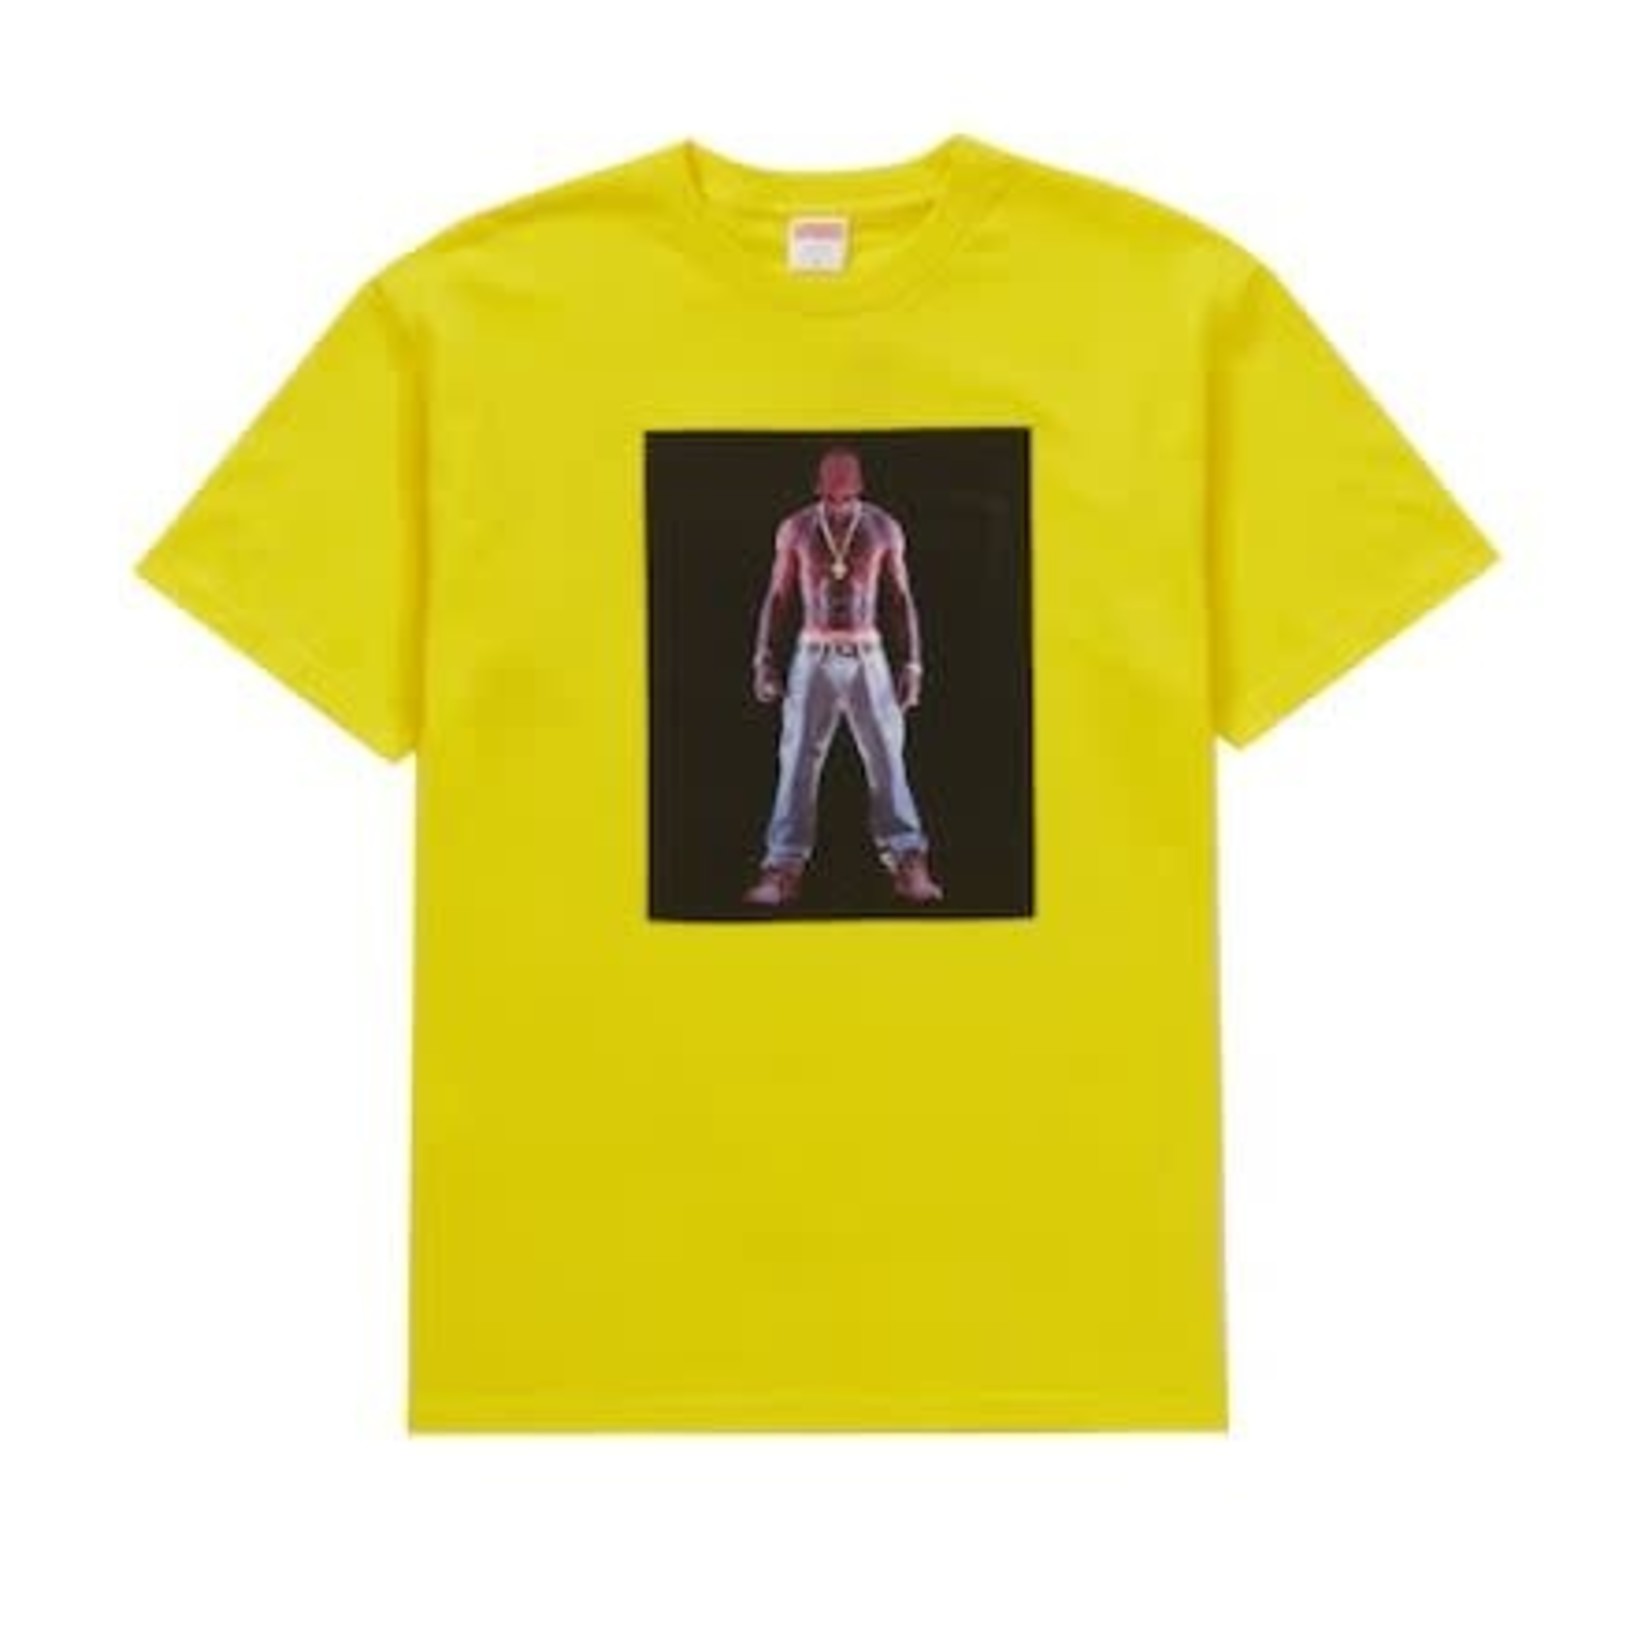 Supreme Supreme Tupac Hologram Tee Yellow Size Large, DS BRAND NEW